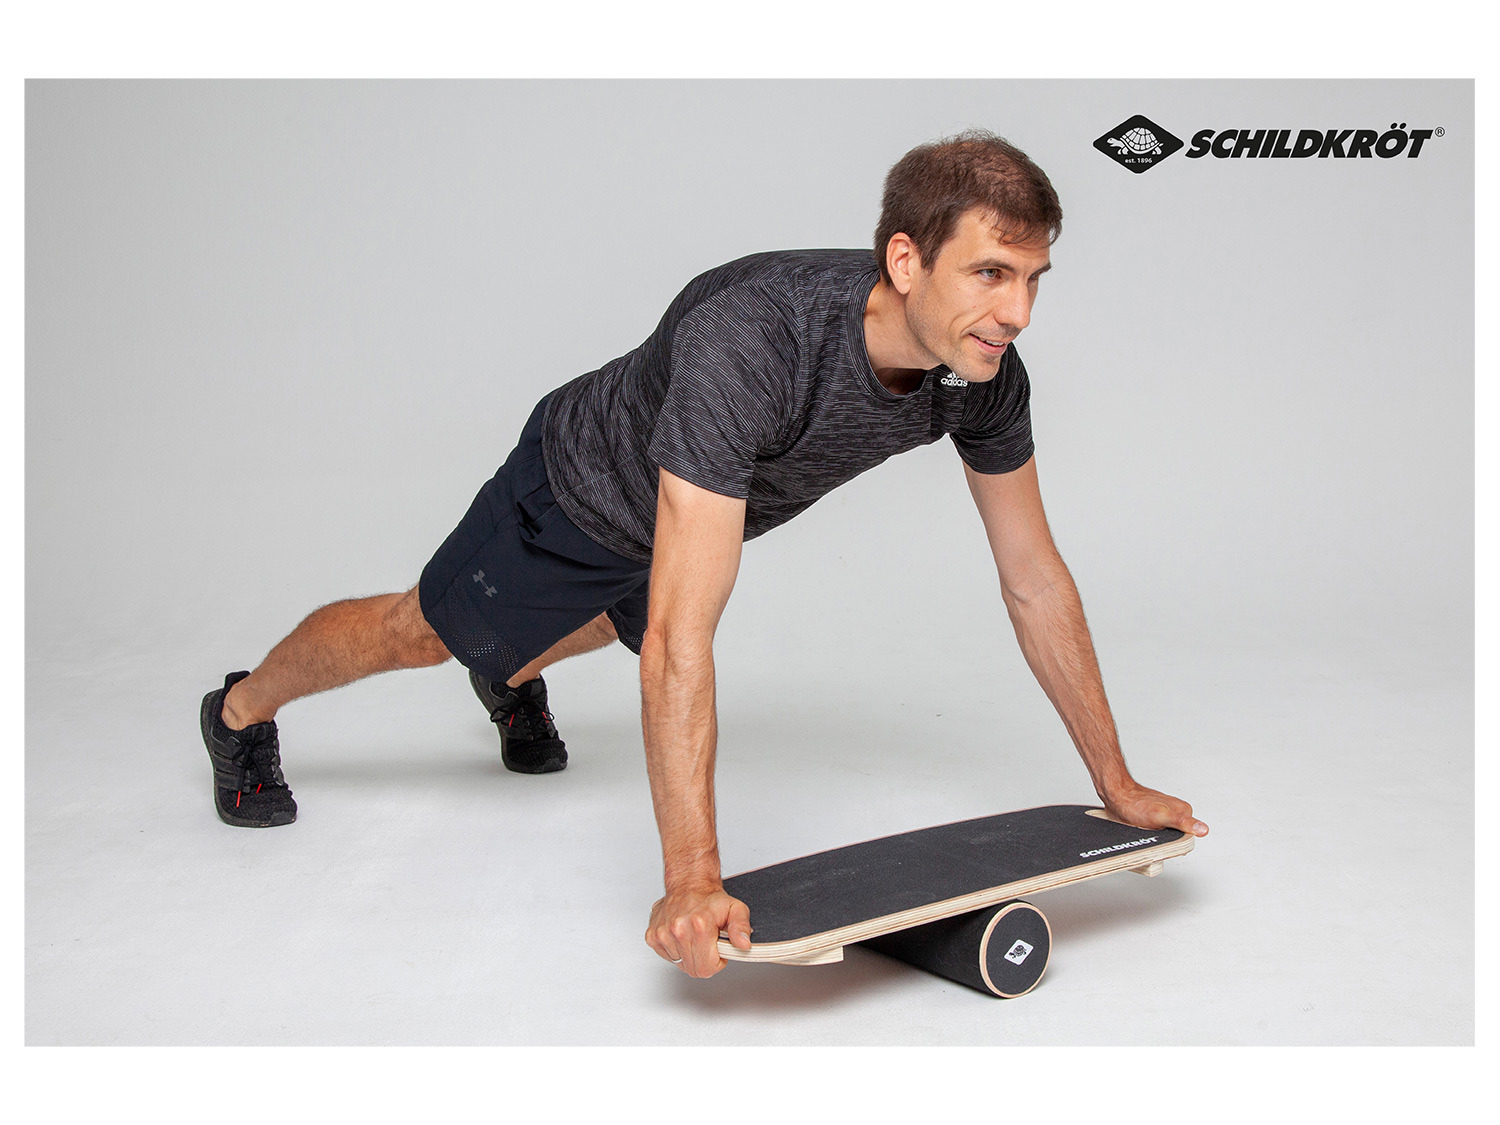 | Schildkröt Board Wooden Fitness LIDL Balance